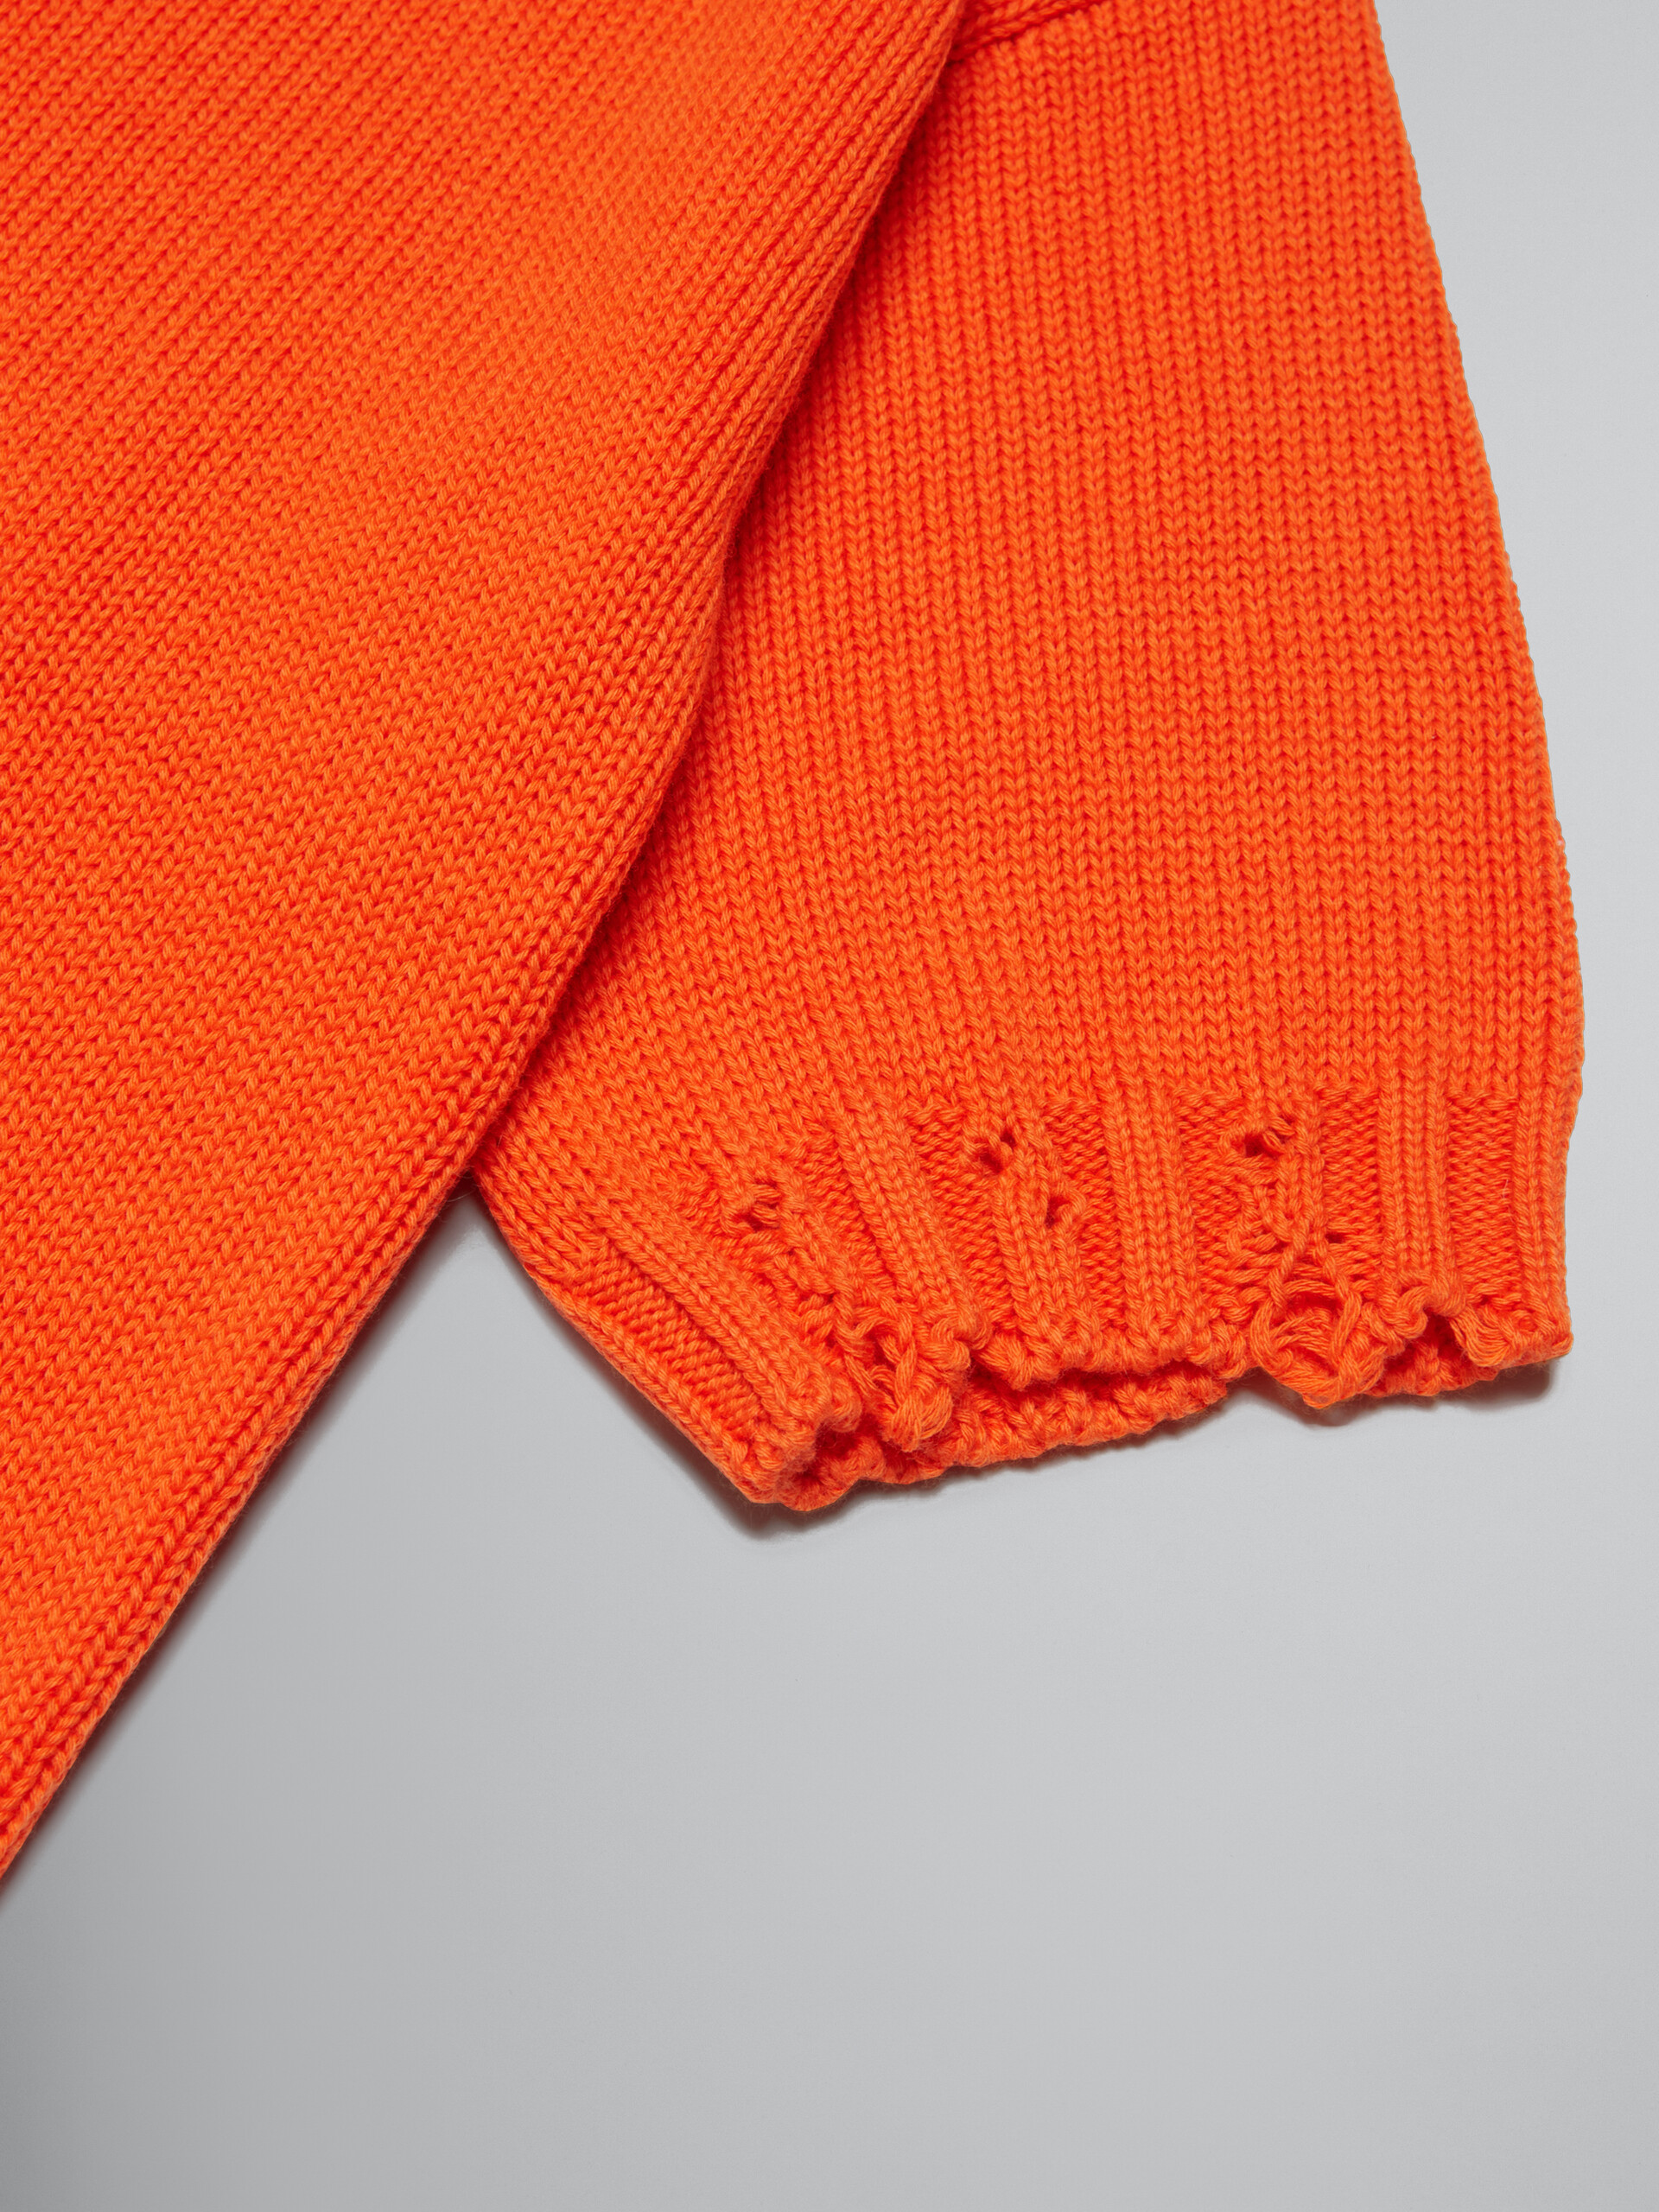 Orange cotton dress - Dresses - Image 4